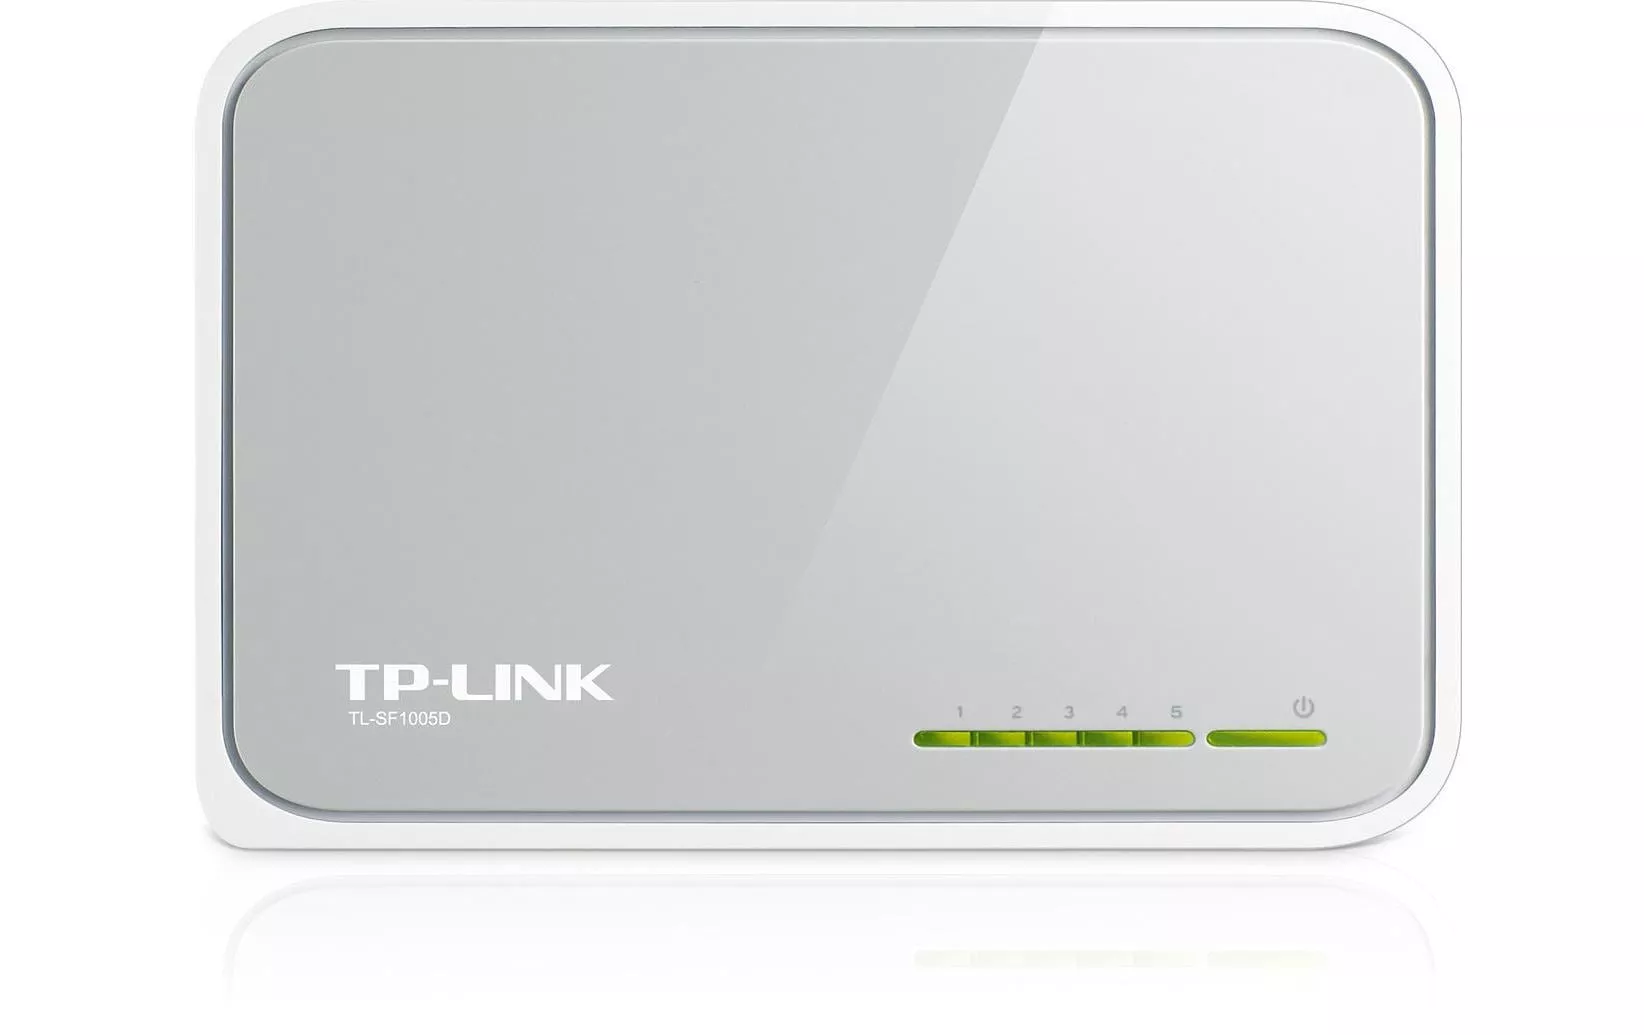 Interruttore TP-Link TL-SF1005D 5 porte